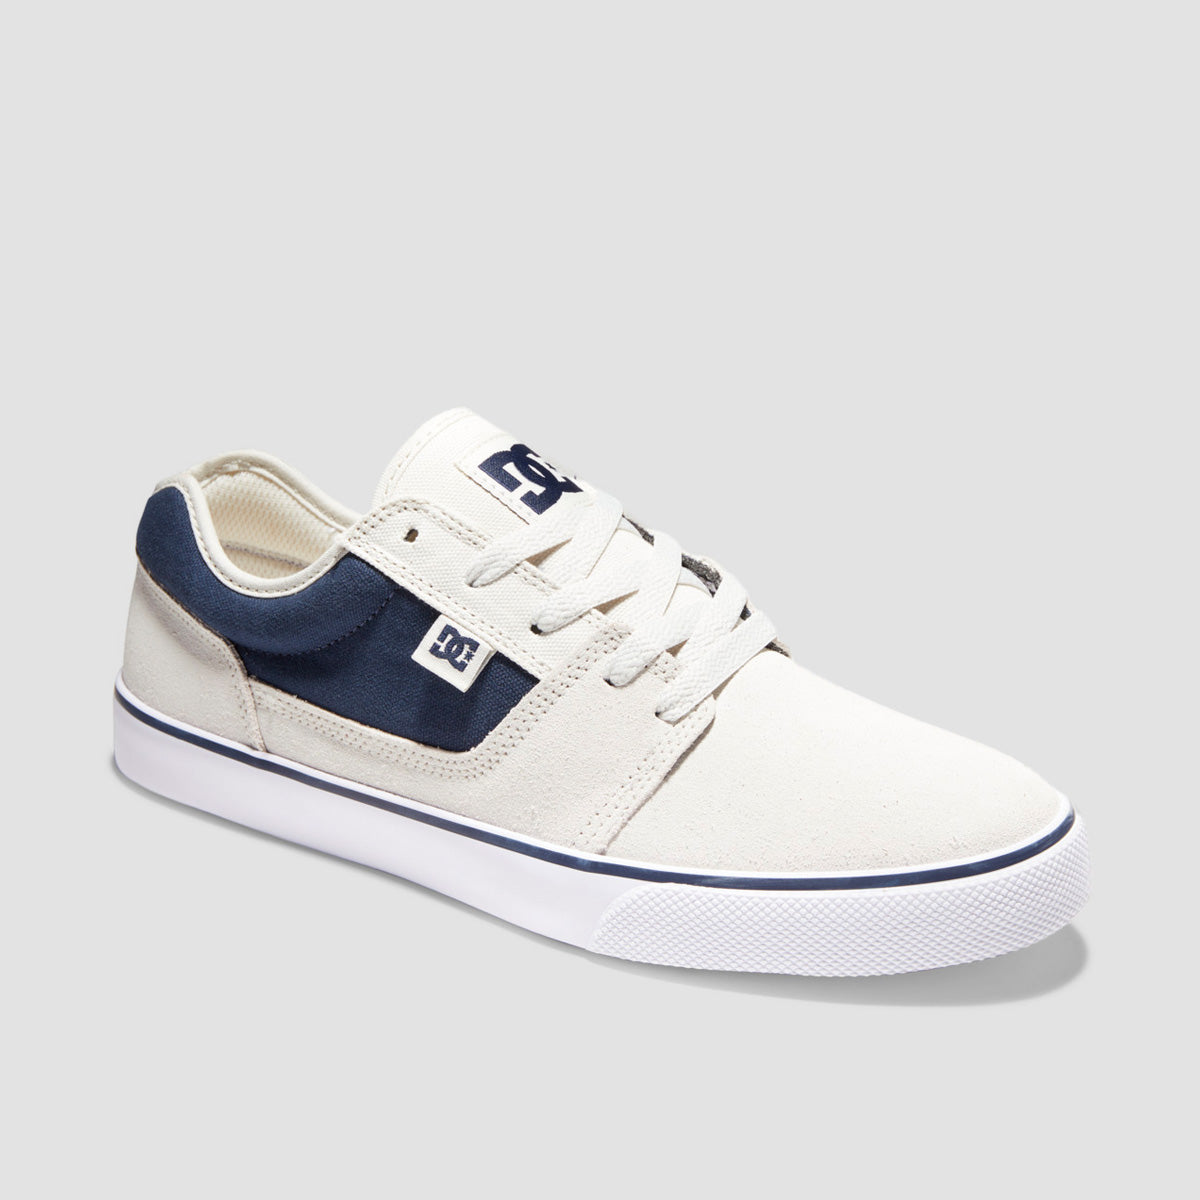 DC Tonik Shoes - White/Navy